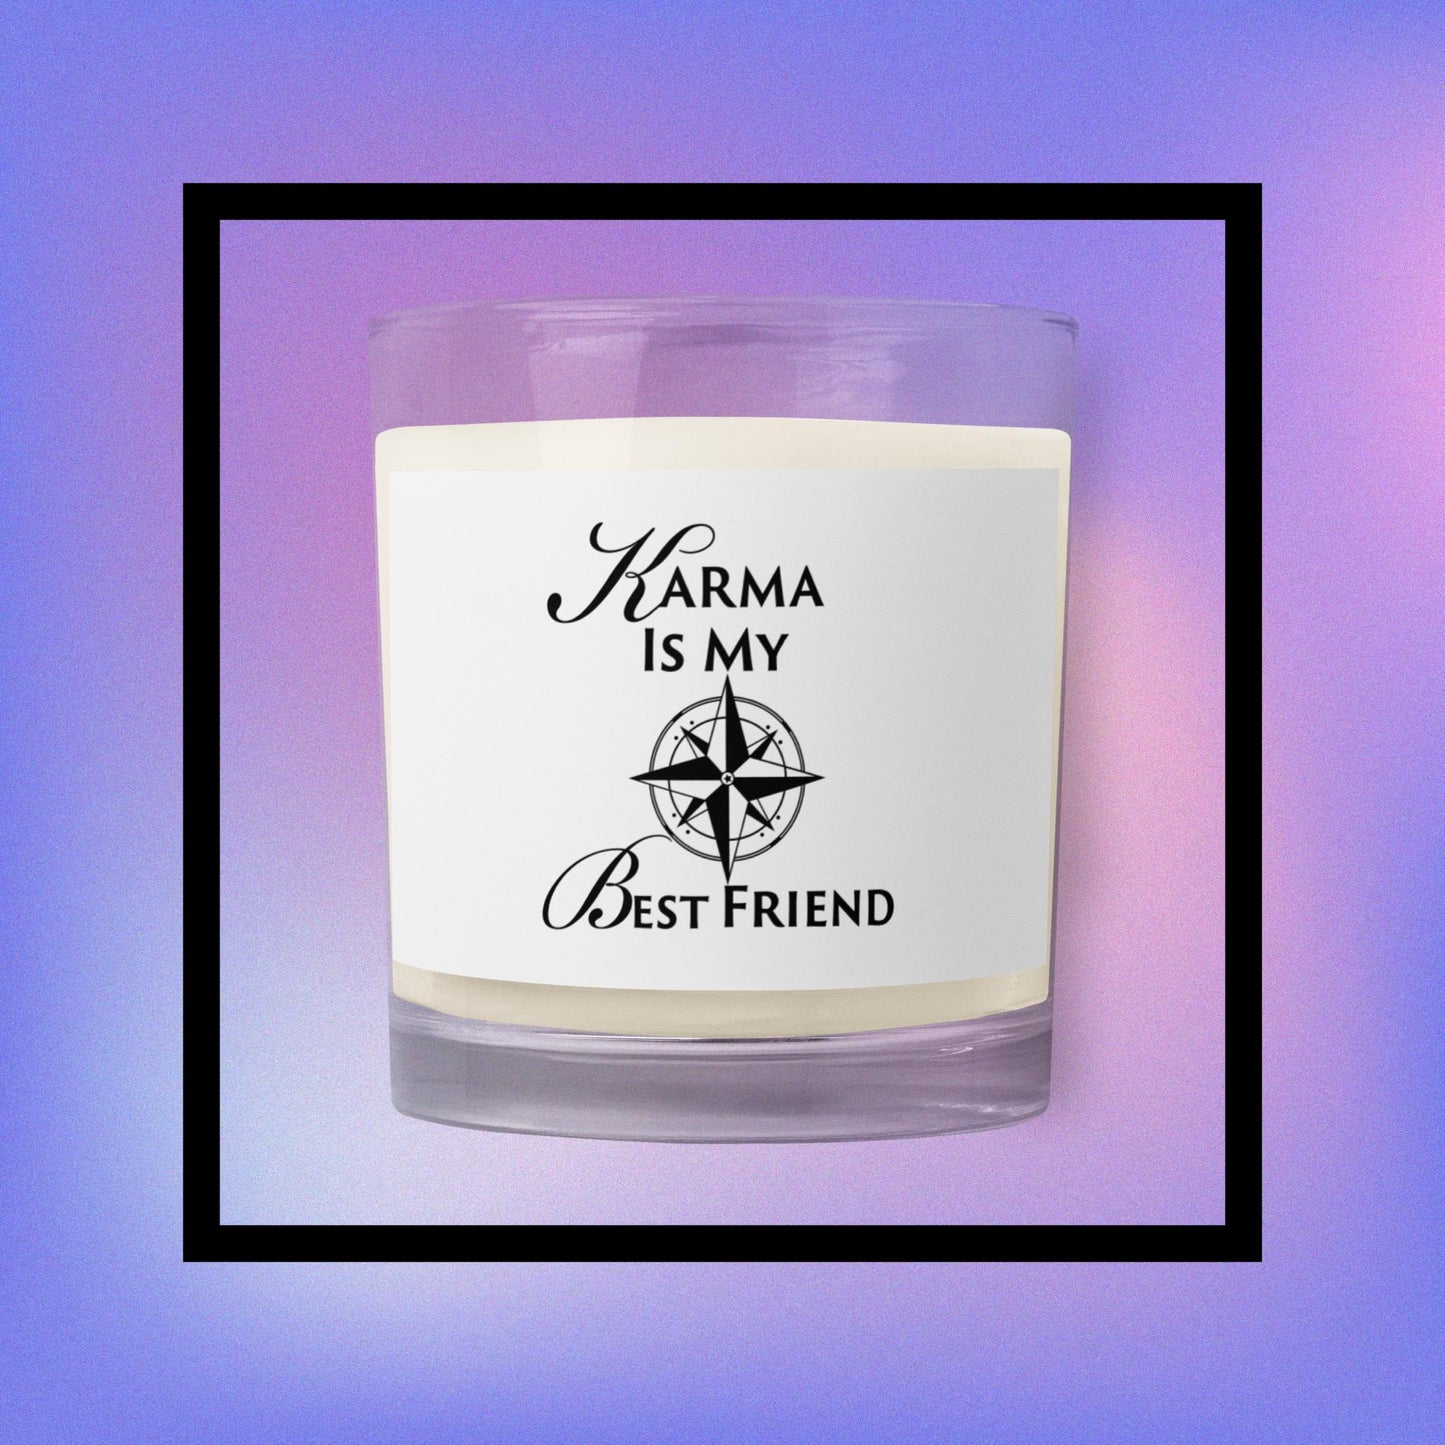 Celebration Mindset Exclusive: Karma Is My Best Friend. Glass jar soy wax candle